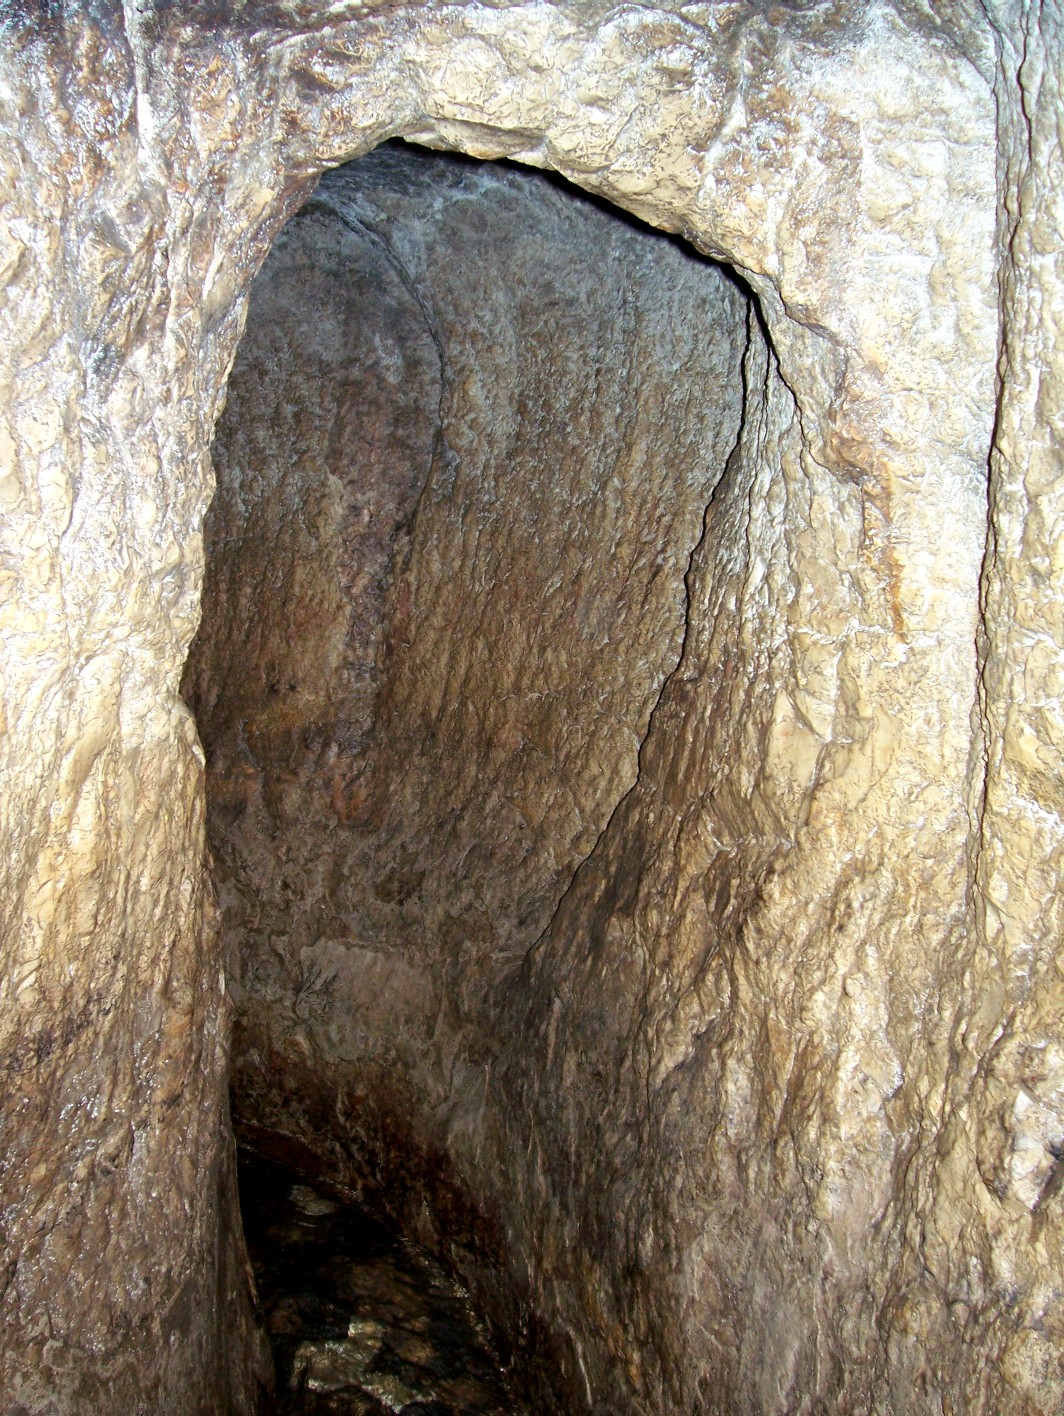 Hezekiah Tunnel